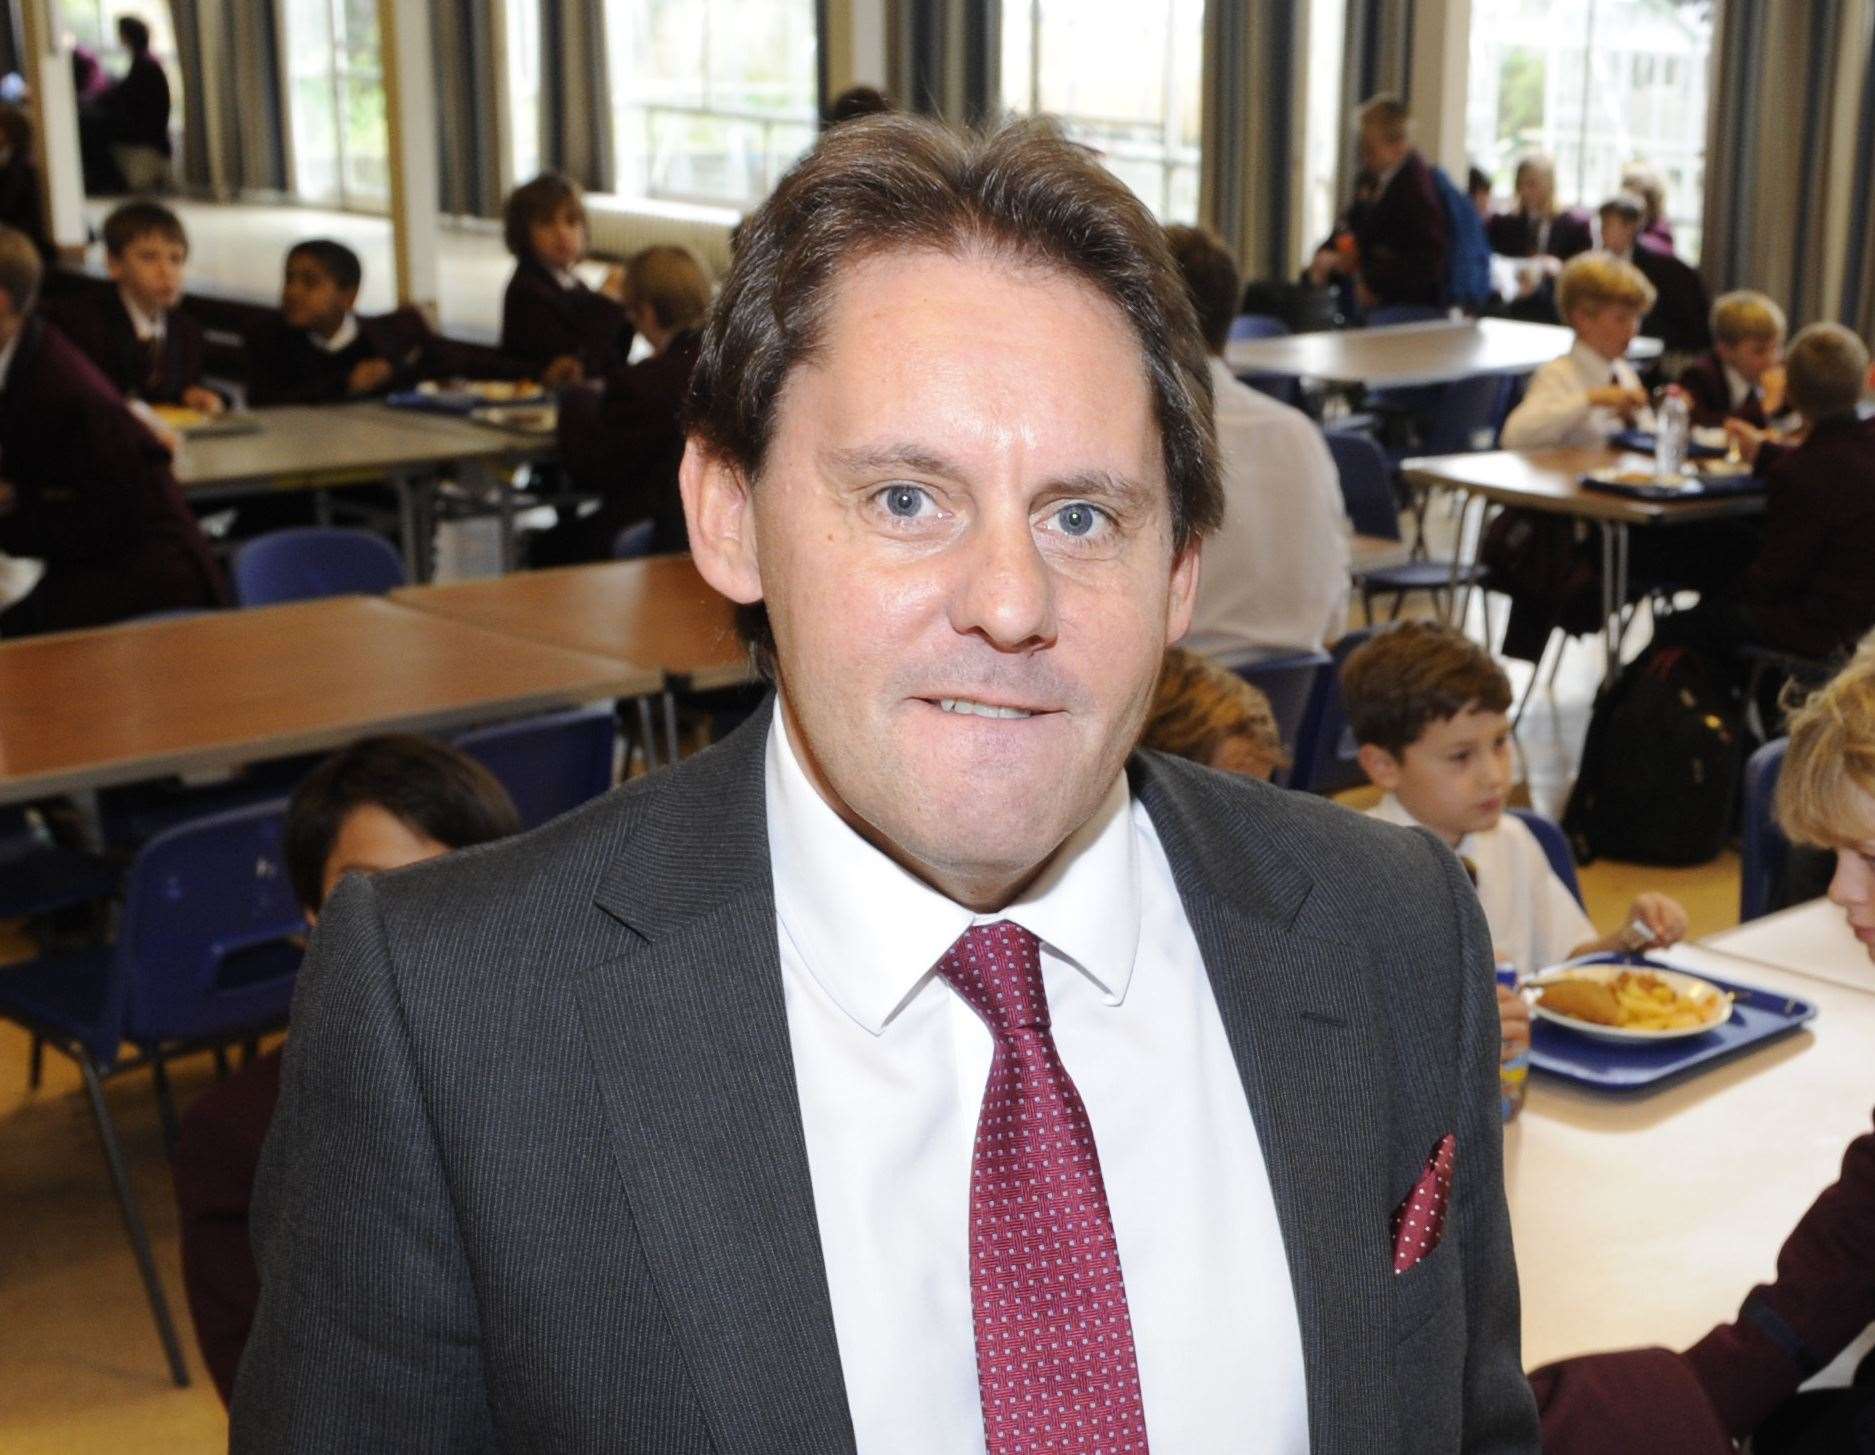 Ken Moffat, head teacher at the Simon Langton Grammar School for Boys